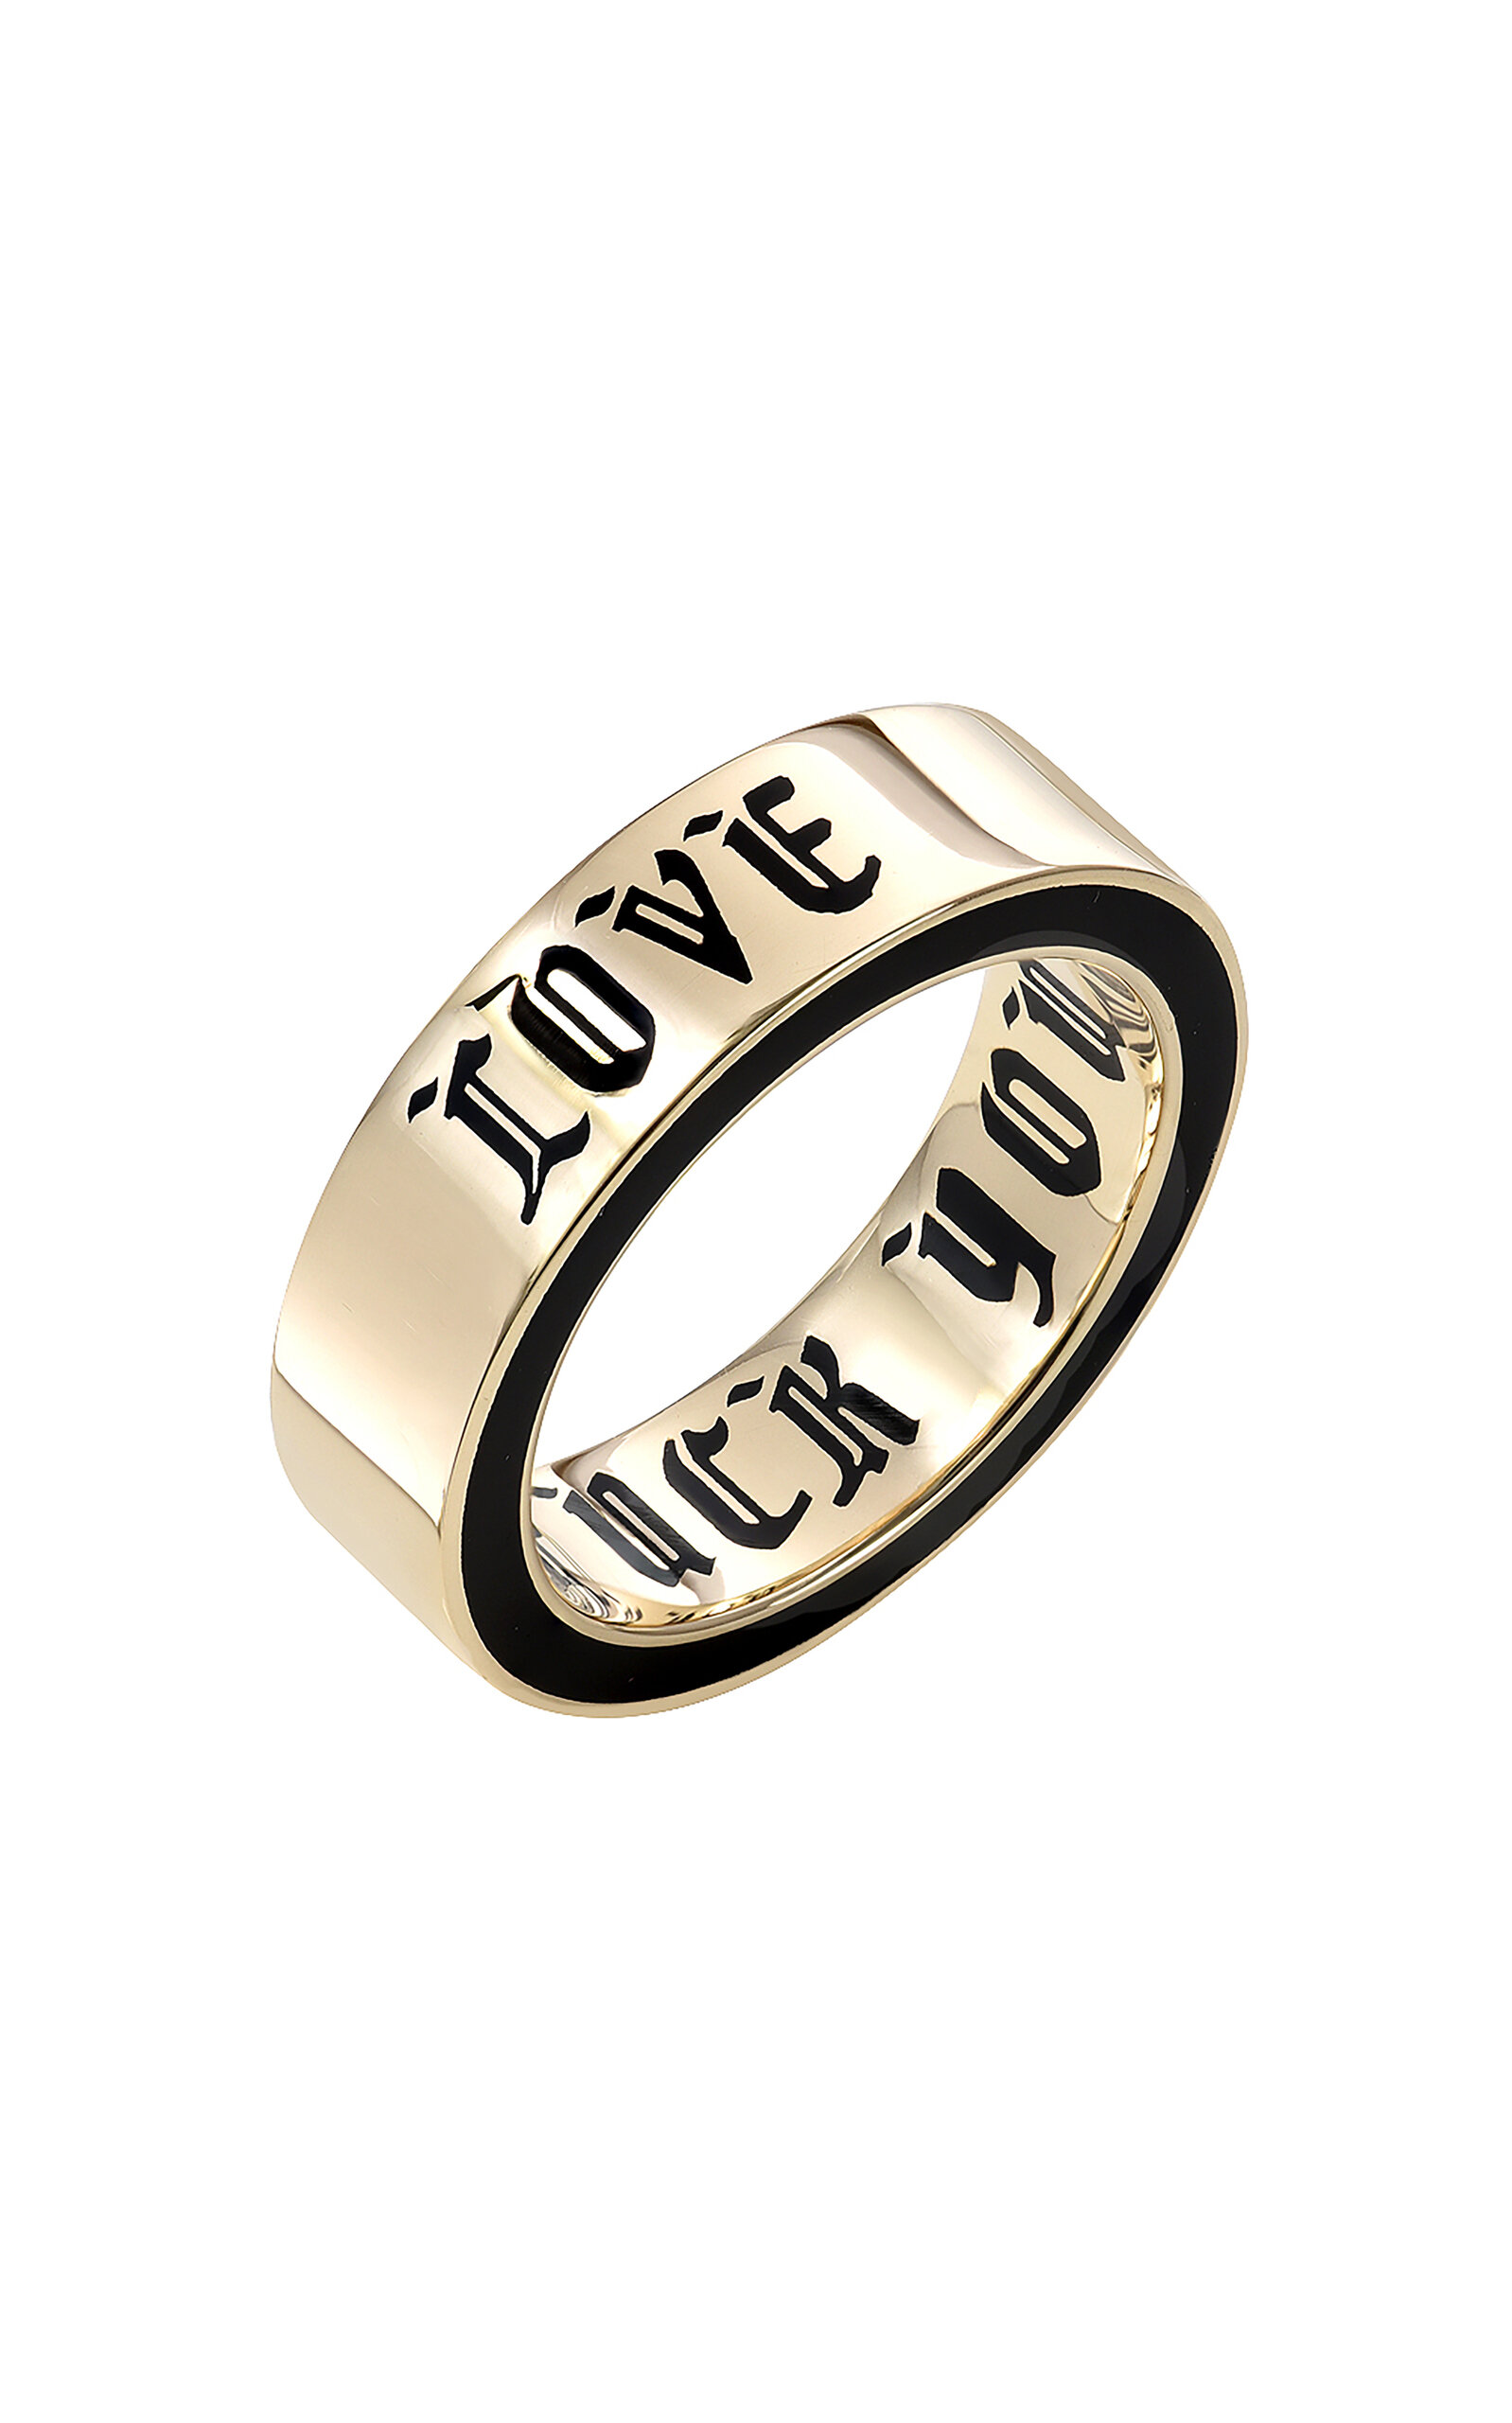 Dru Love/f*** You 14k Yellow Gold Ring